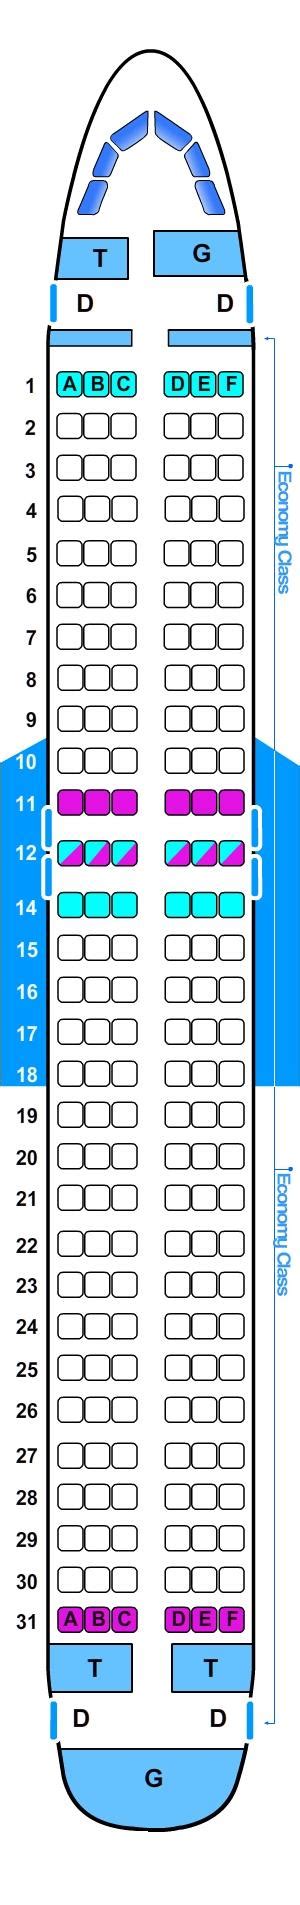 Avianca A320 Seat Map Image To U